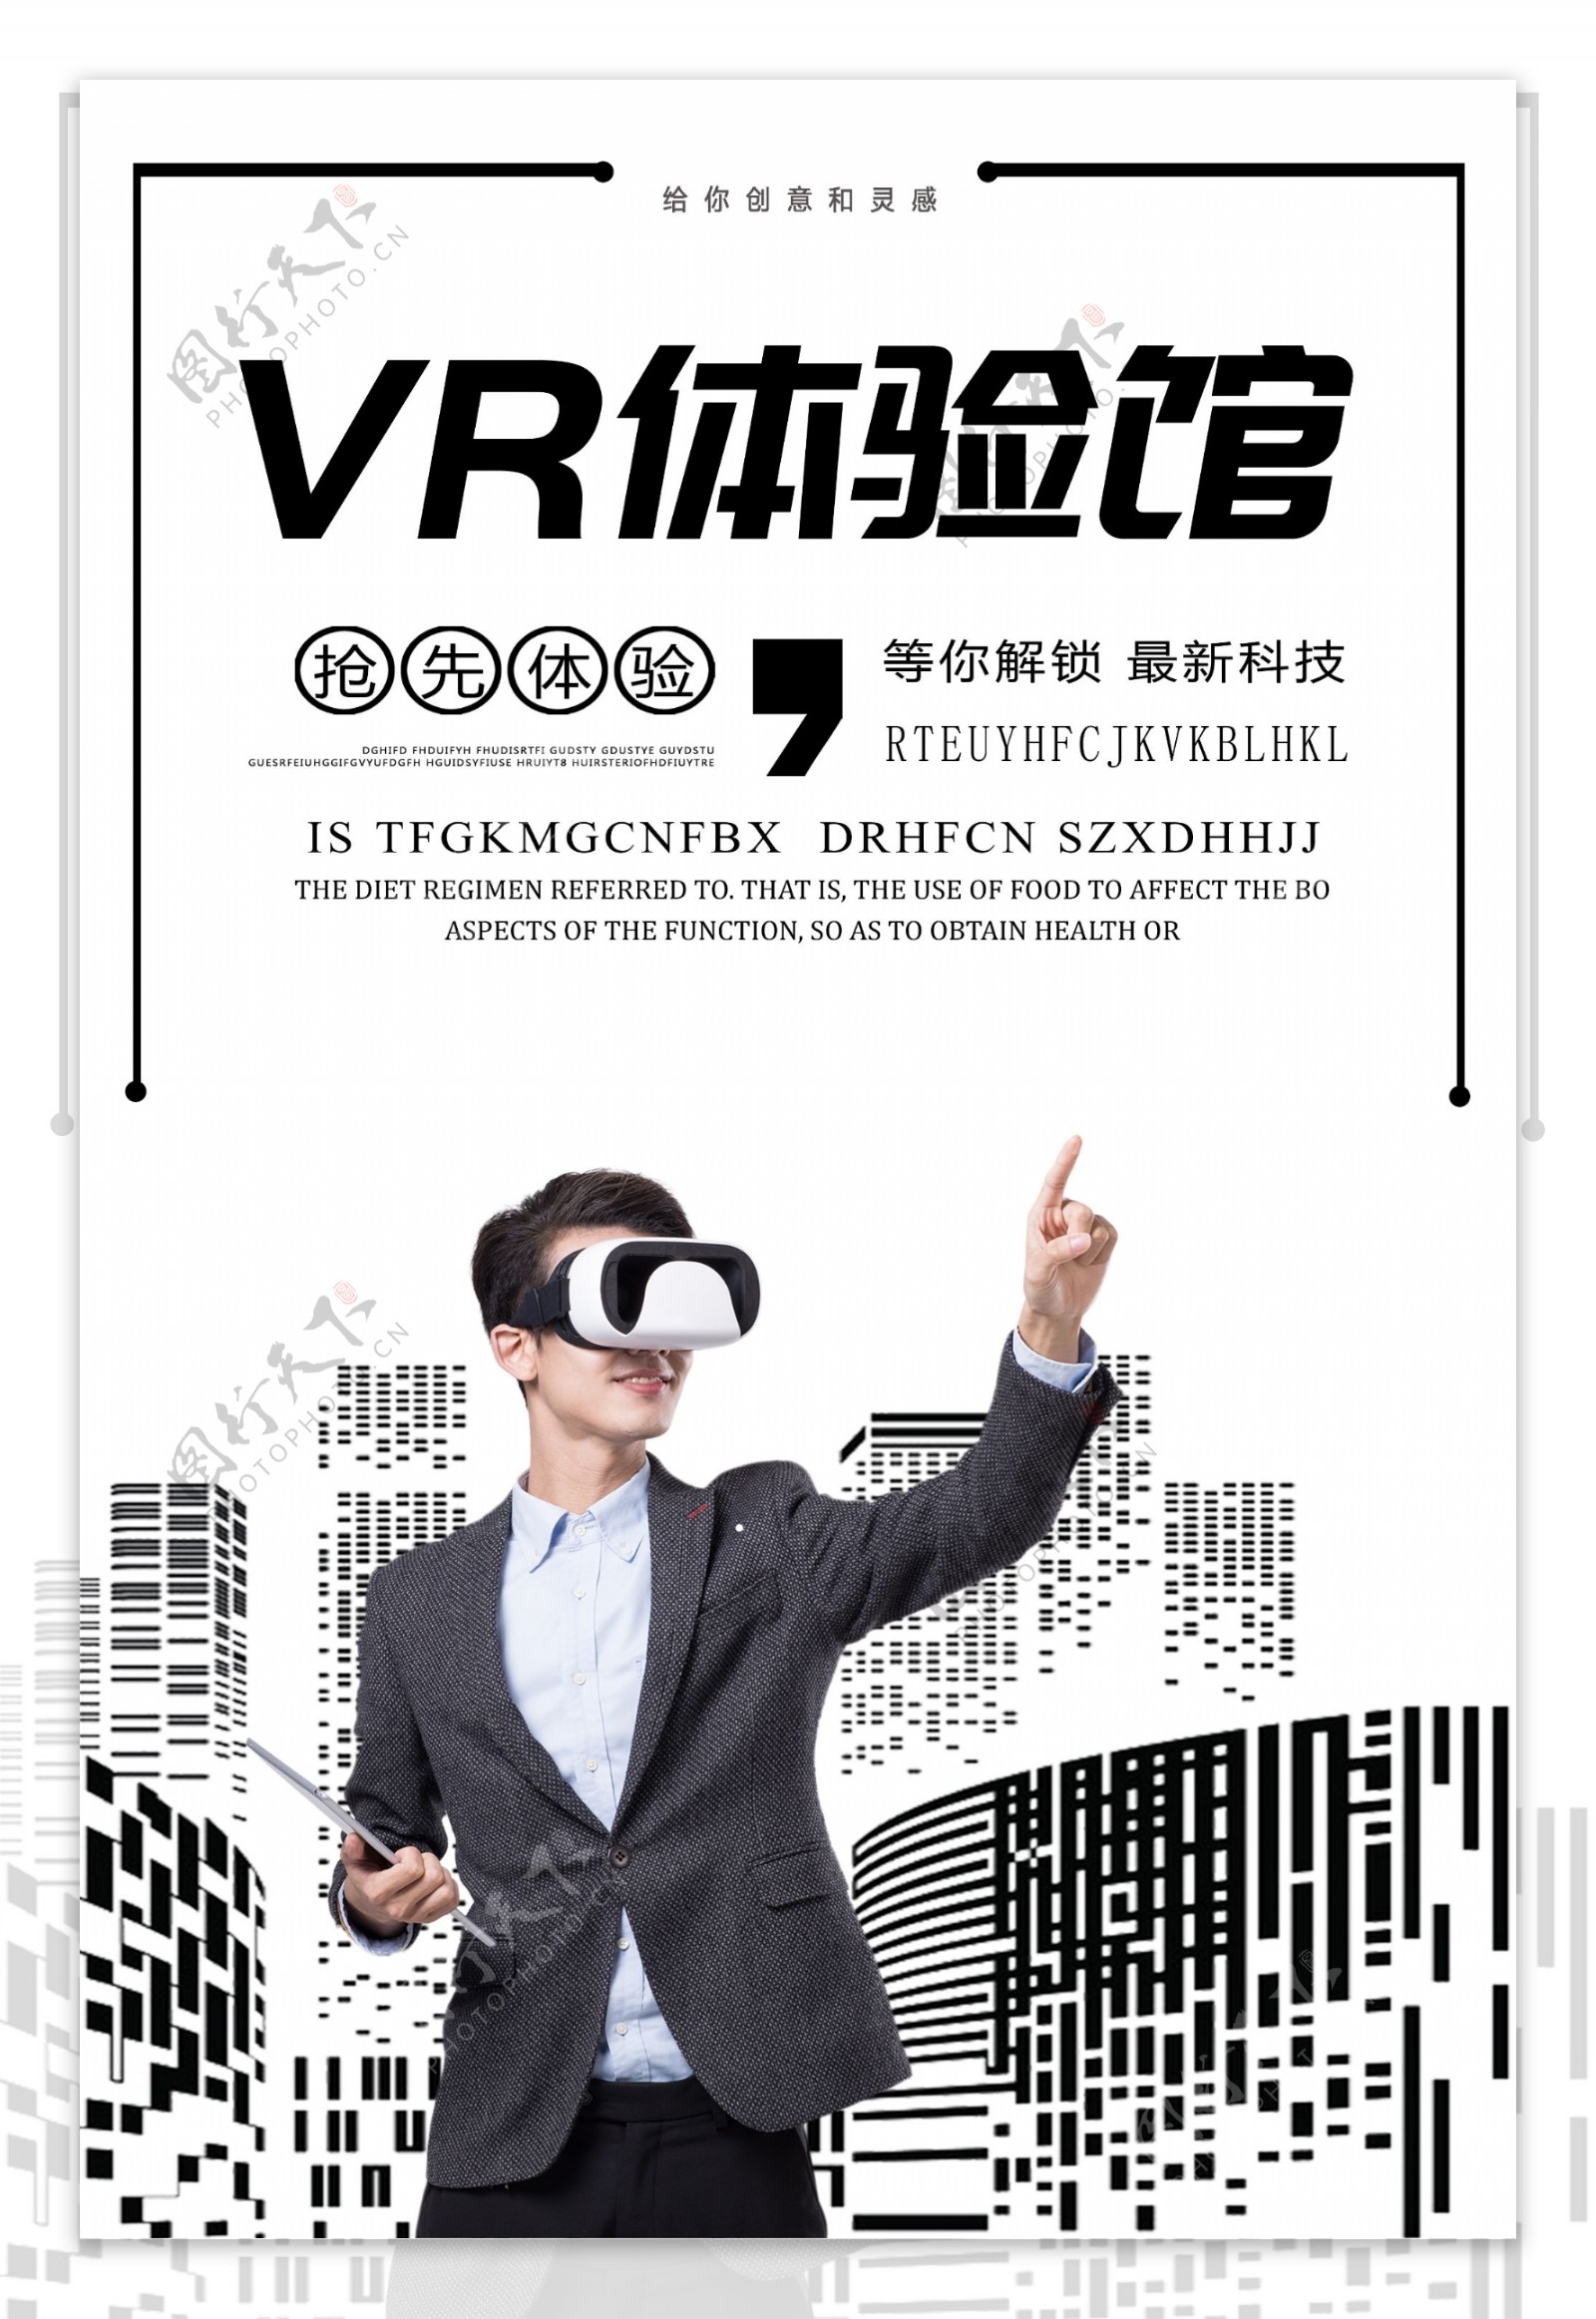 VR体验海报